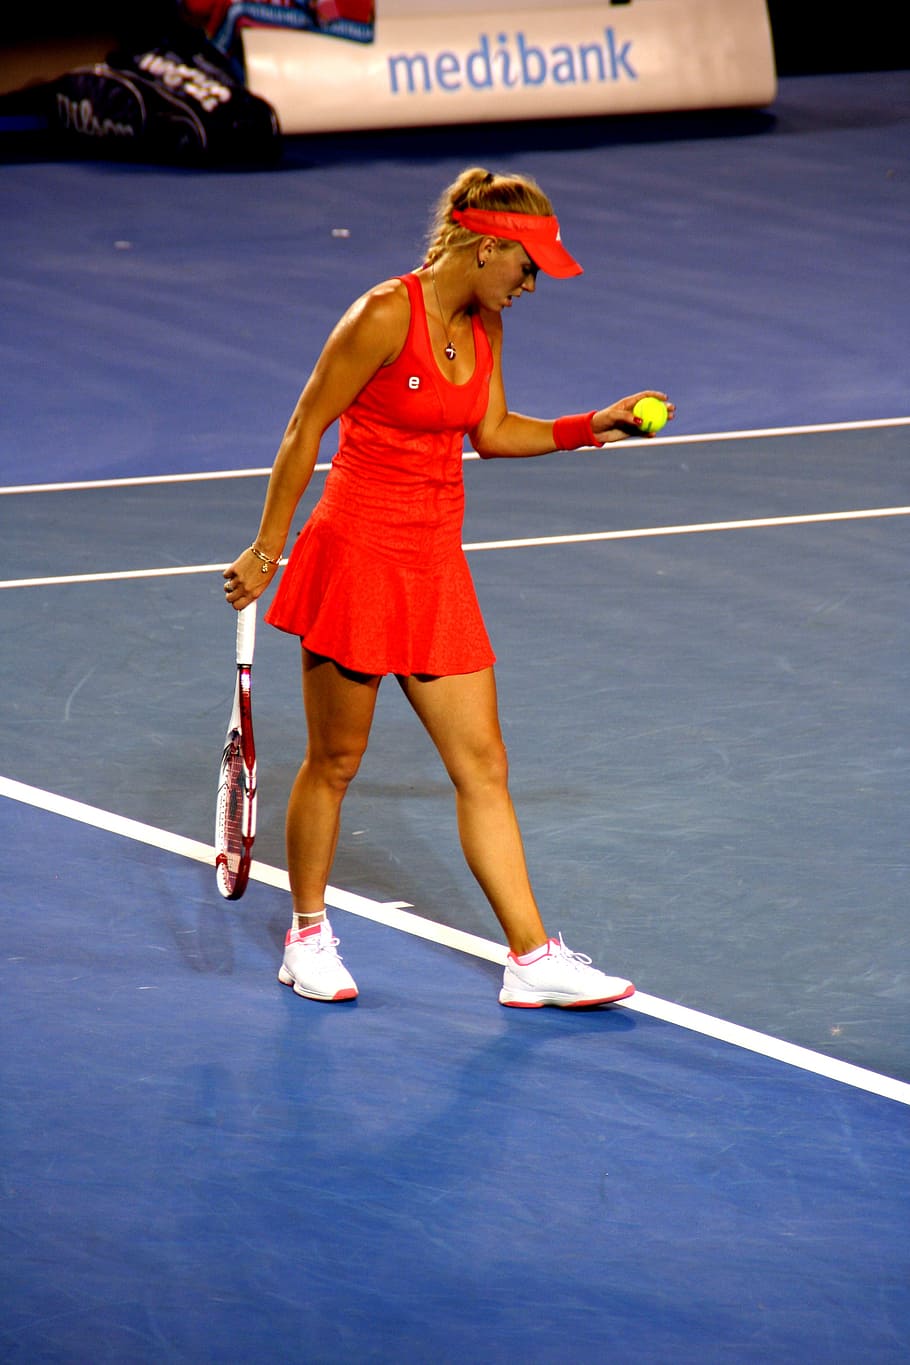 female tennis player performing serve, caroline wozniacki, woman